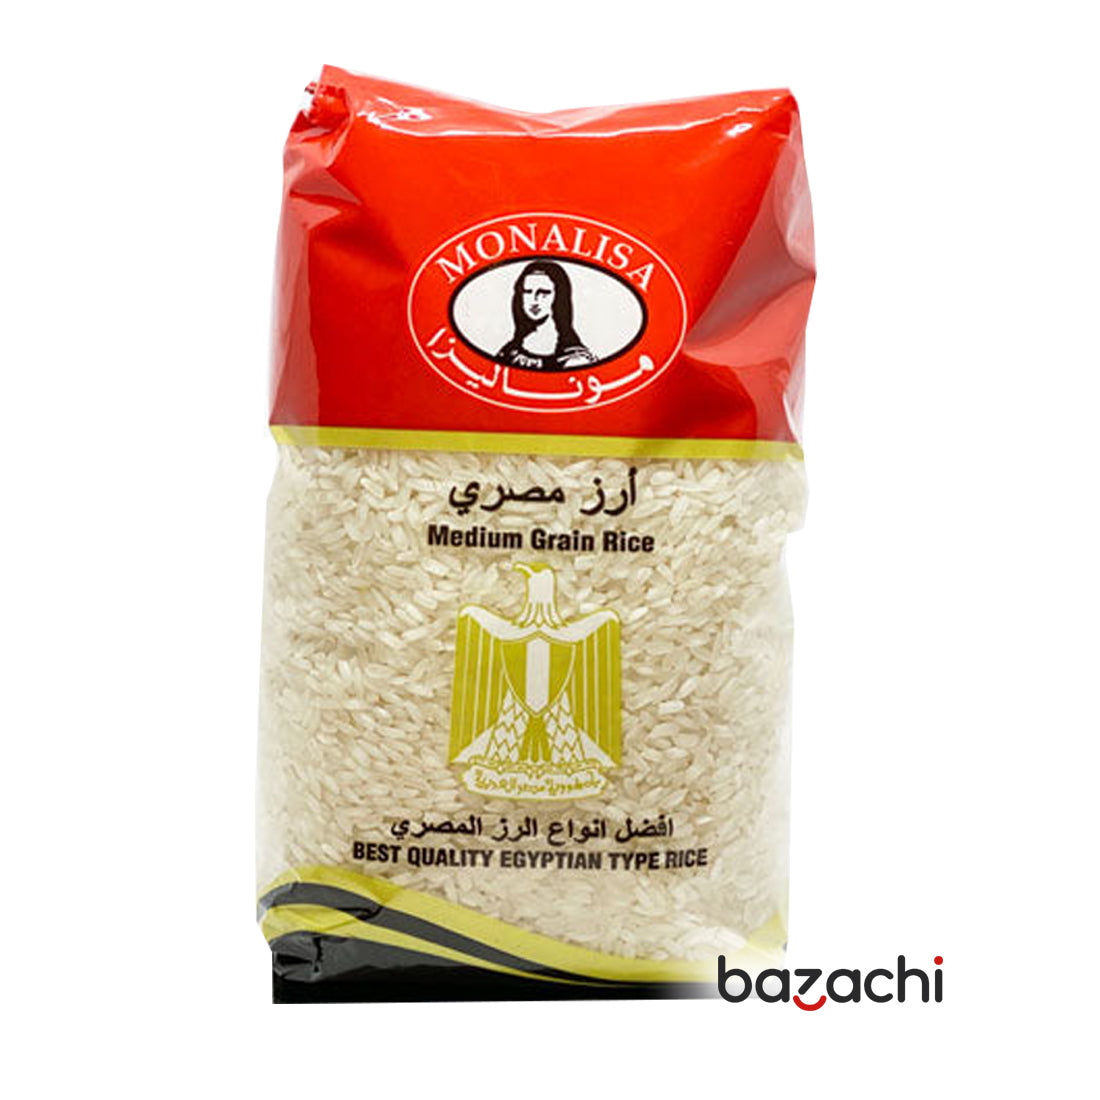 Monalisa Egyptian Rice, Medium Grain  1 Kg